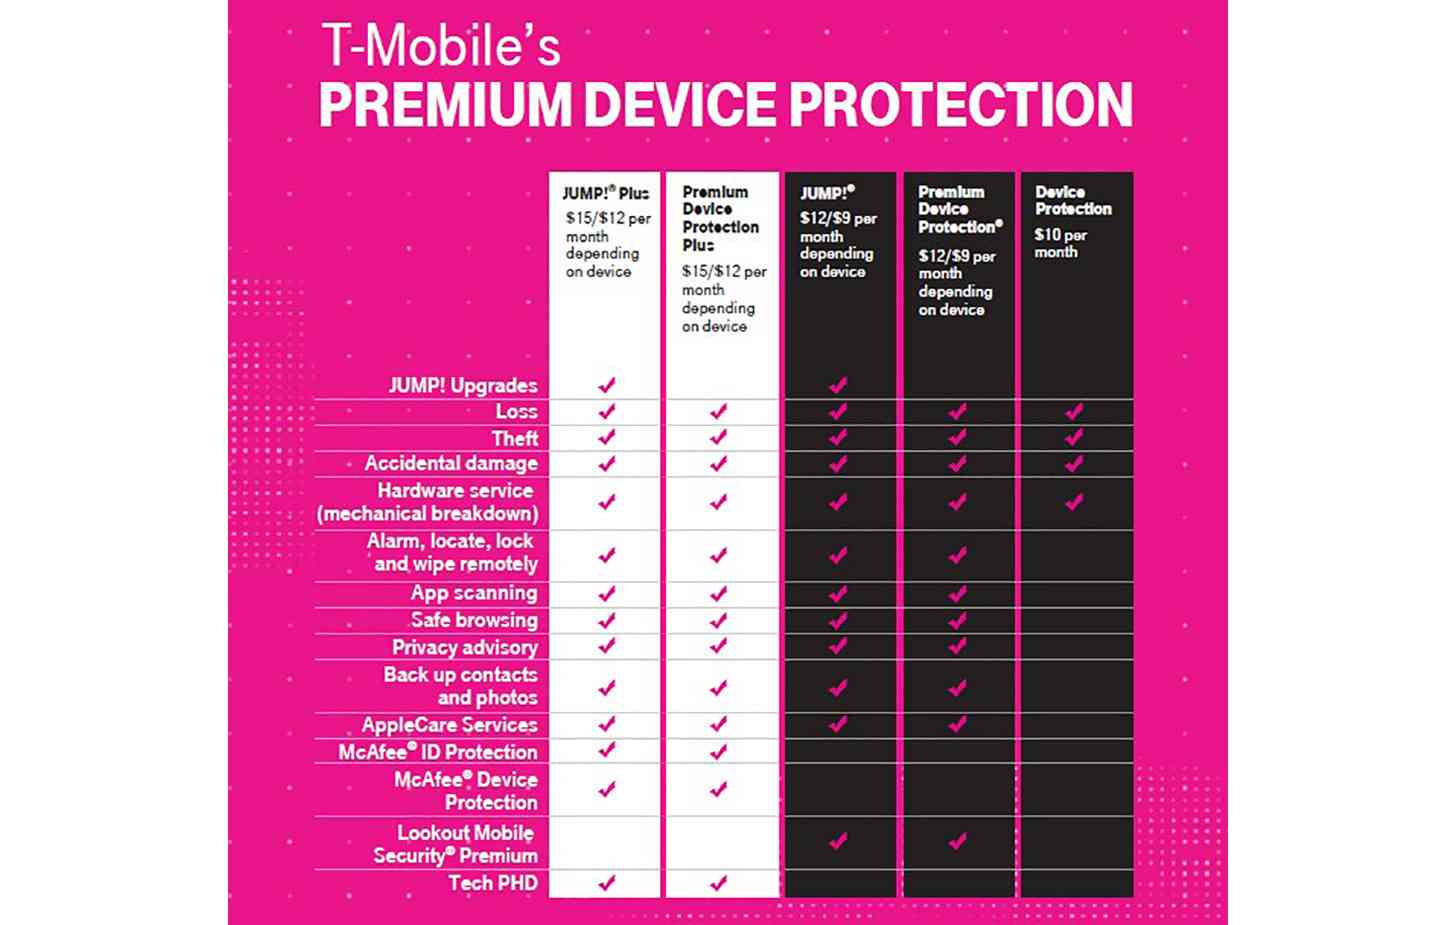 T-Mobile Premium Device Protection Plus features